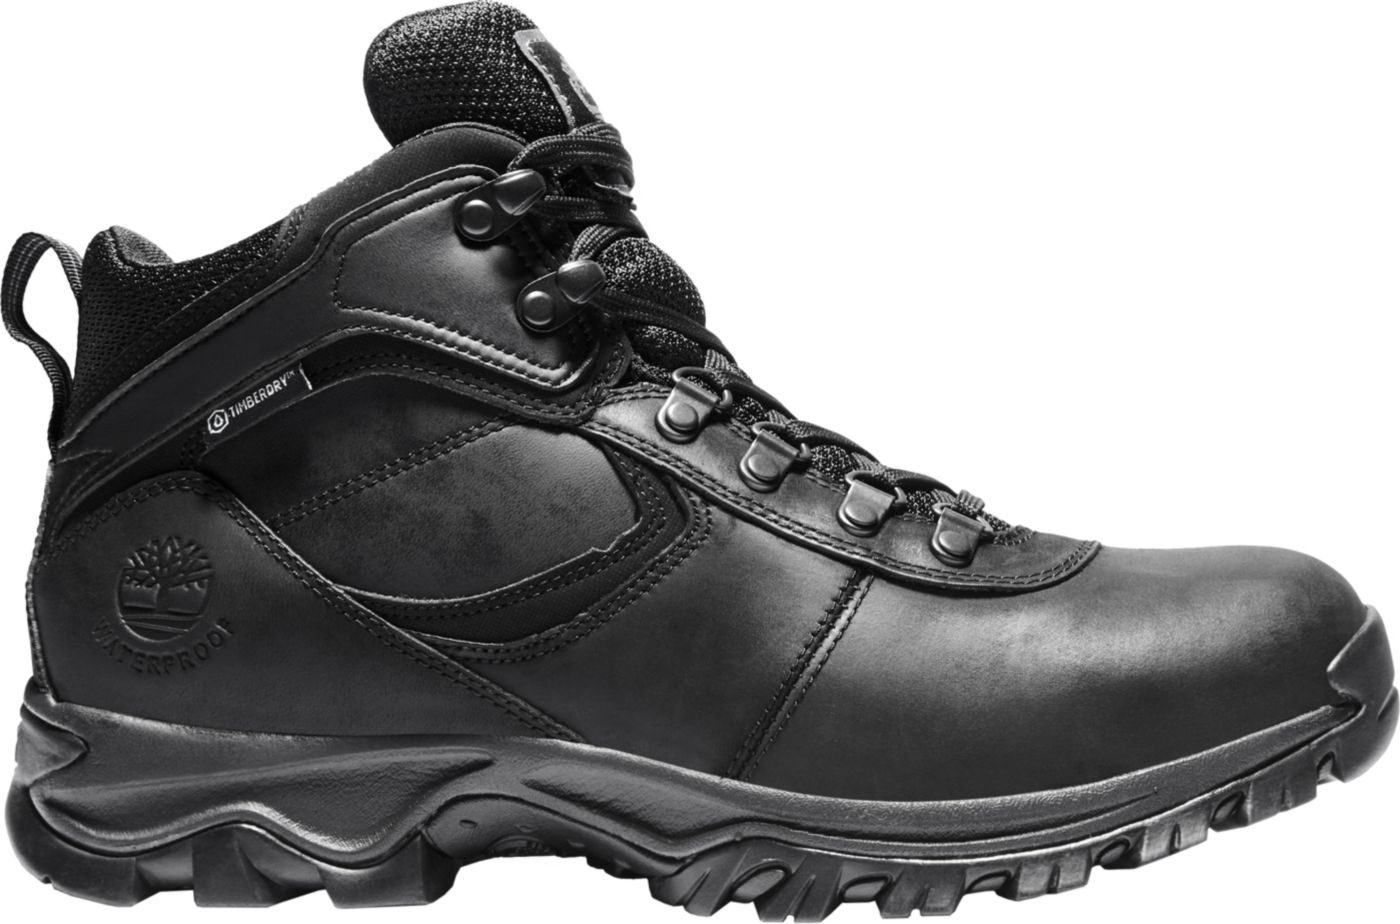 Timberland Men's Mt. Maddsen Mid Waterproof Hiking Boots | DICK'S ...